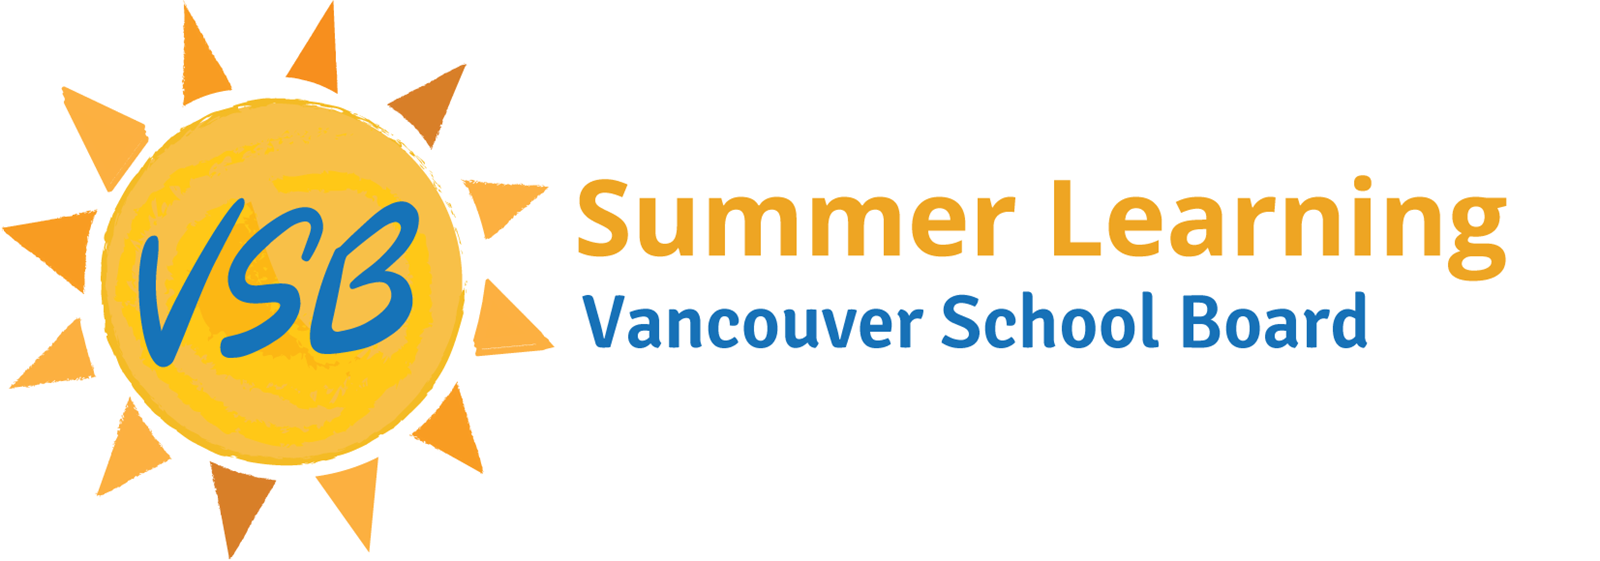 vsb-summer-learning-logo@2x-1.png